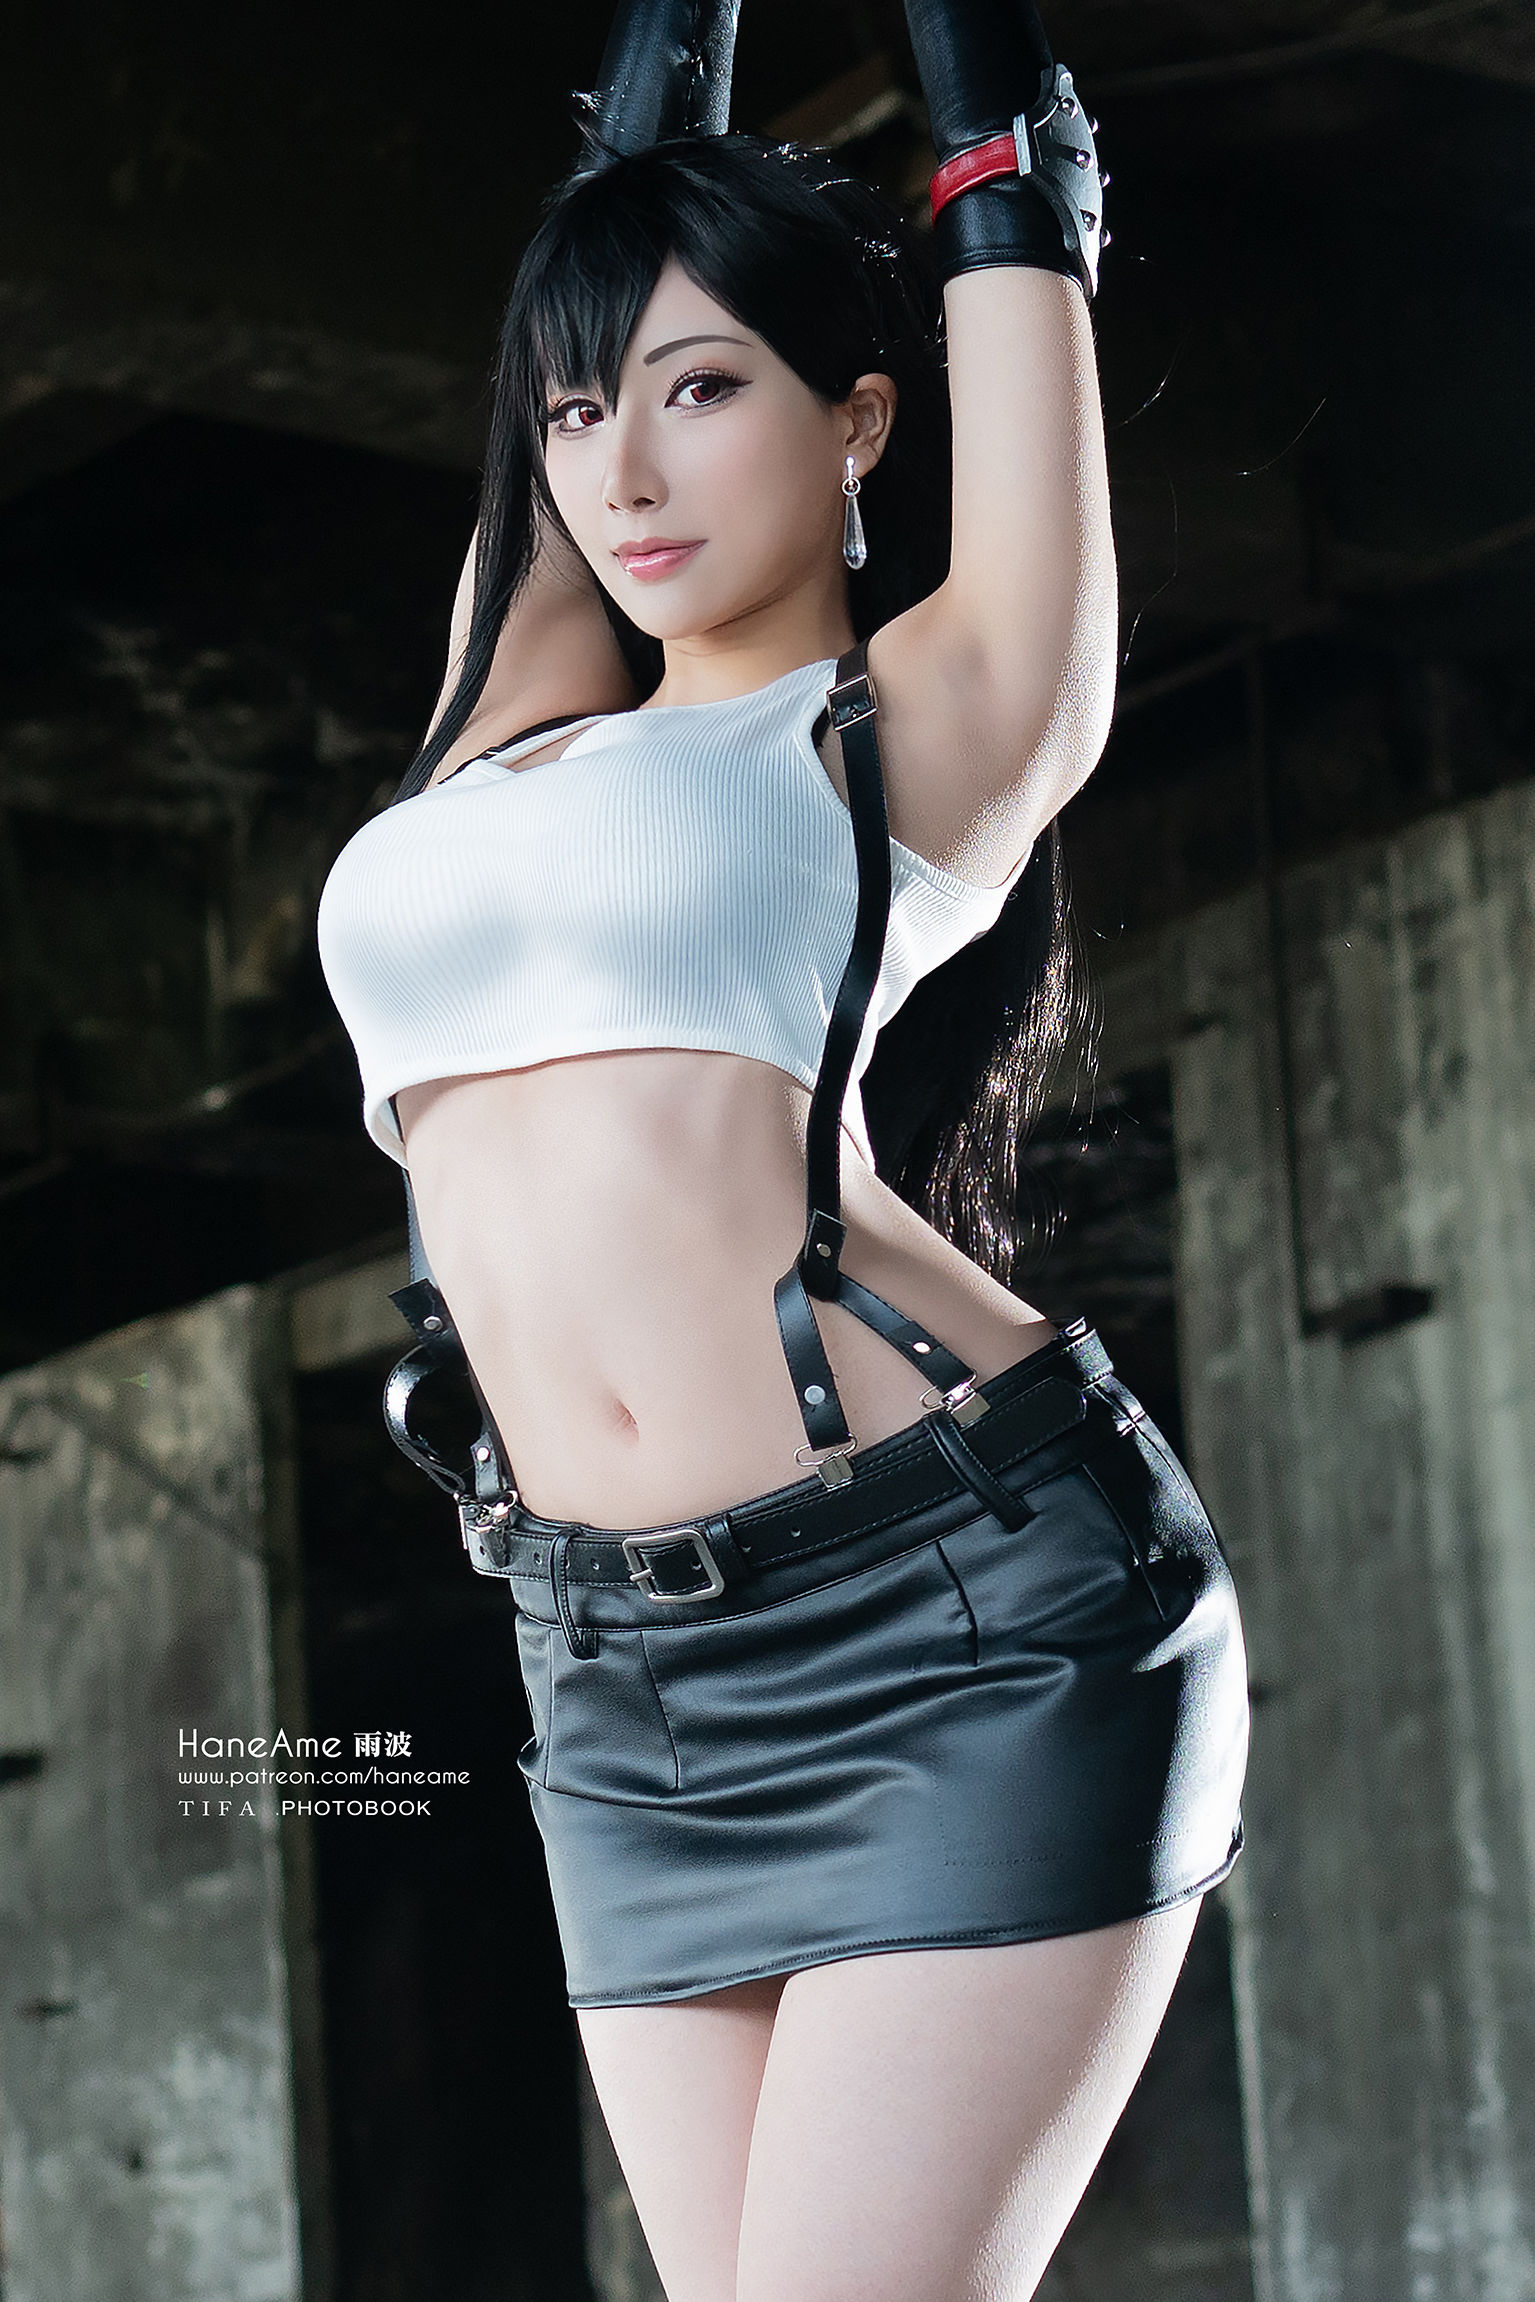 Hane Ame 雨波写真 - TIFA Photobook (Final Fantasy VII) - 1